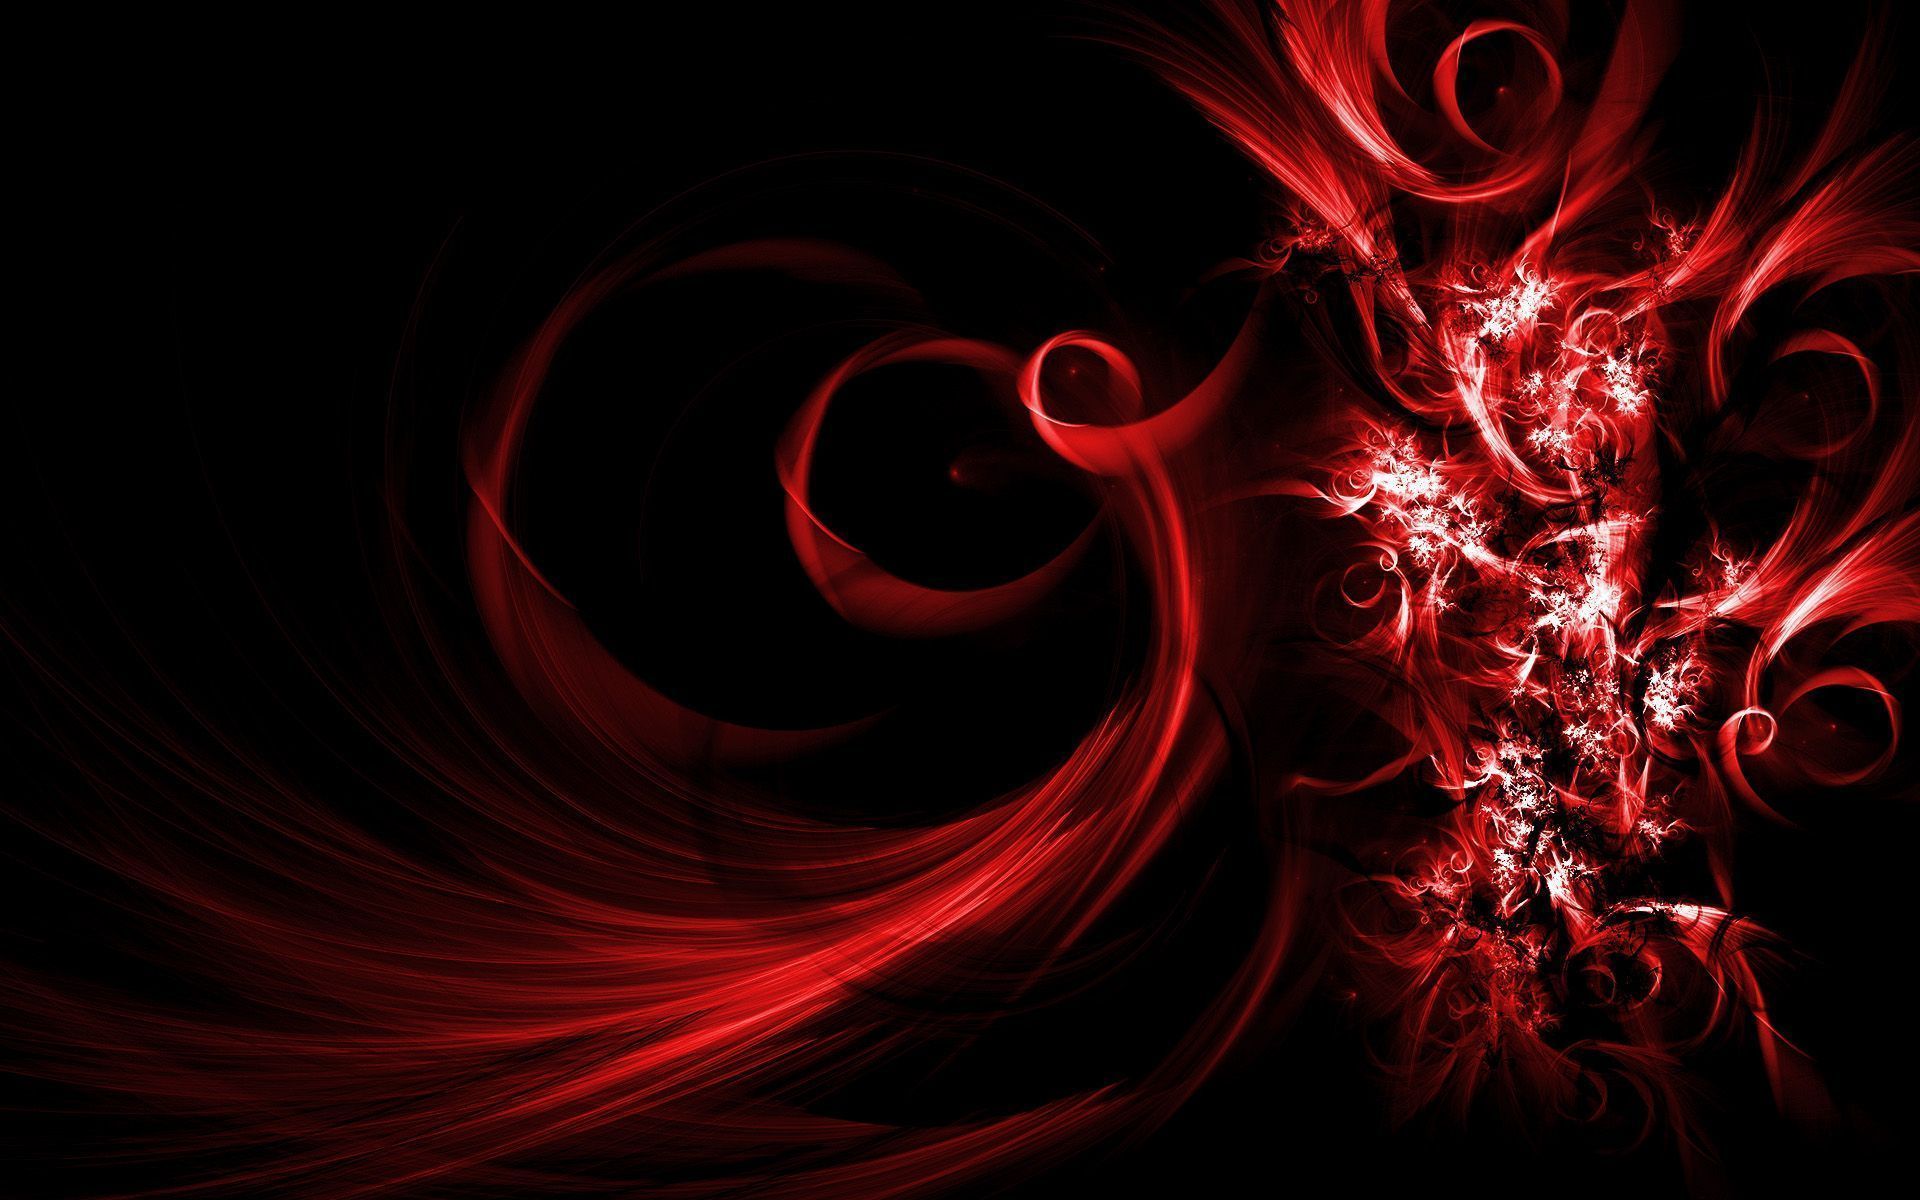 Dark Red Abstract - wallpaper.